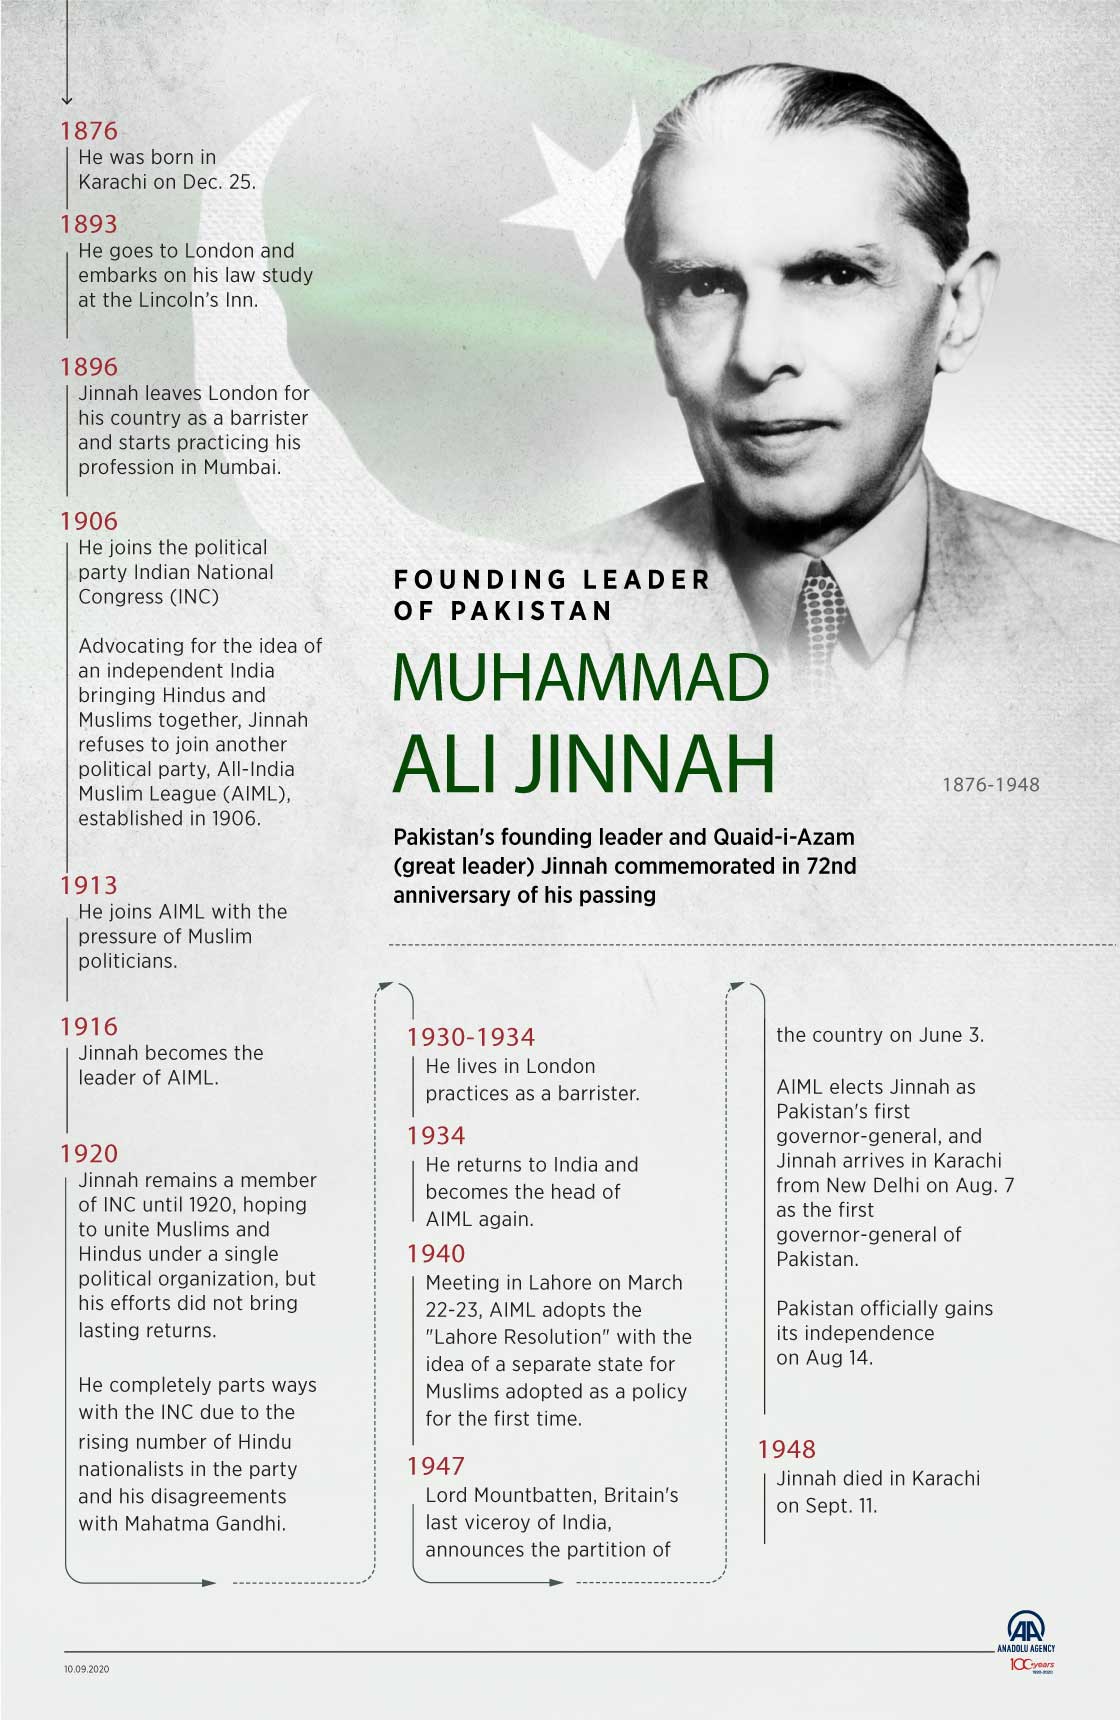 Founding leader of Pakistan Muhammad Ali Jinnah